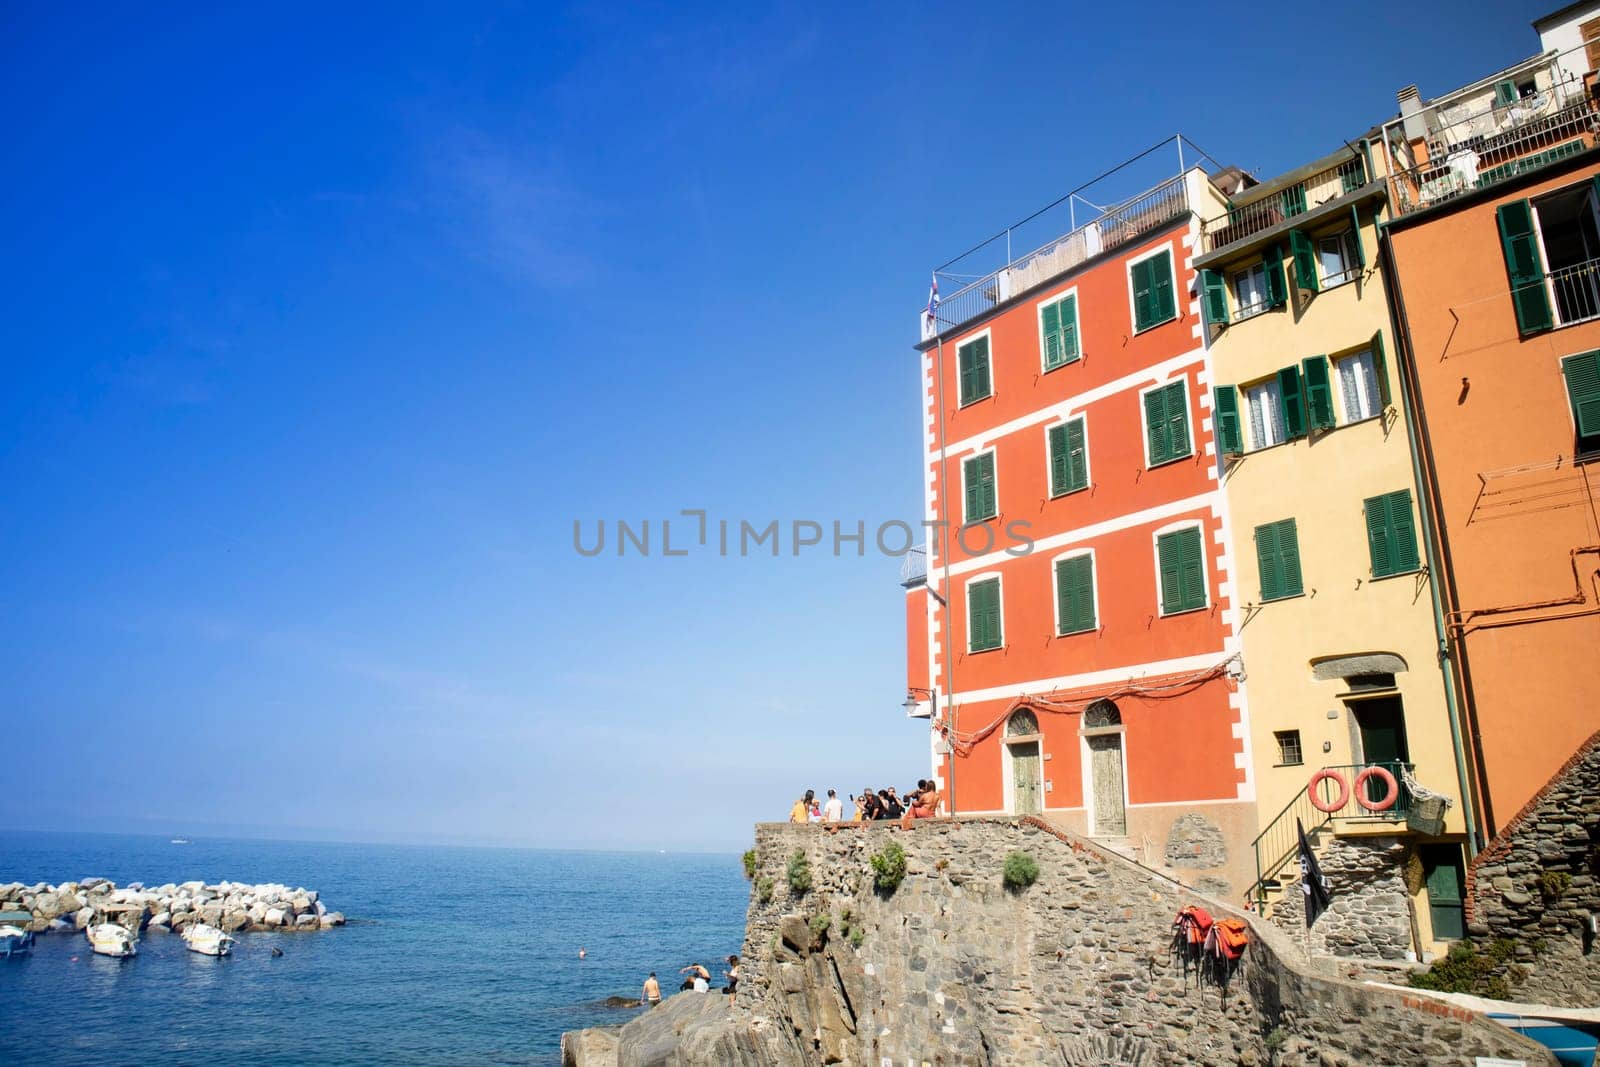 Photographic documentation of the town of Riomaggiore Cinque Terre Liguria 
Italy 